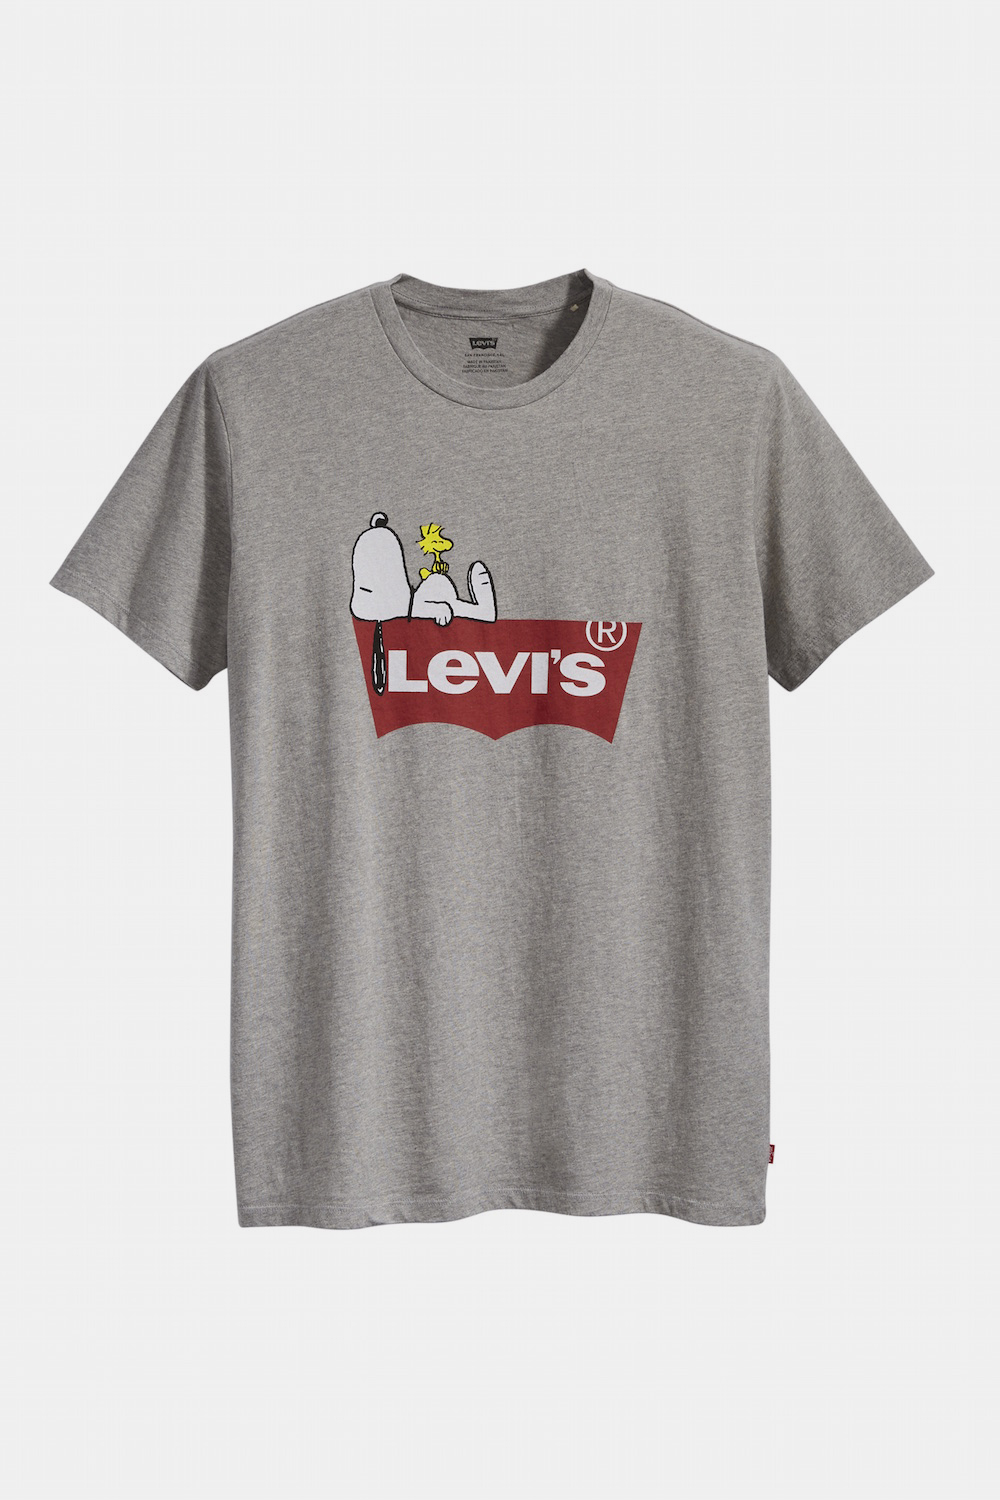 levis peanuts spring 2019 Levi's